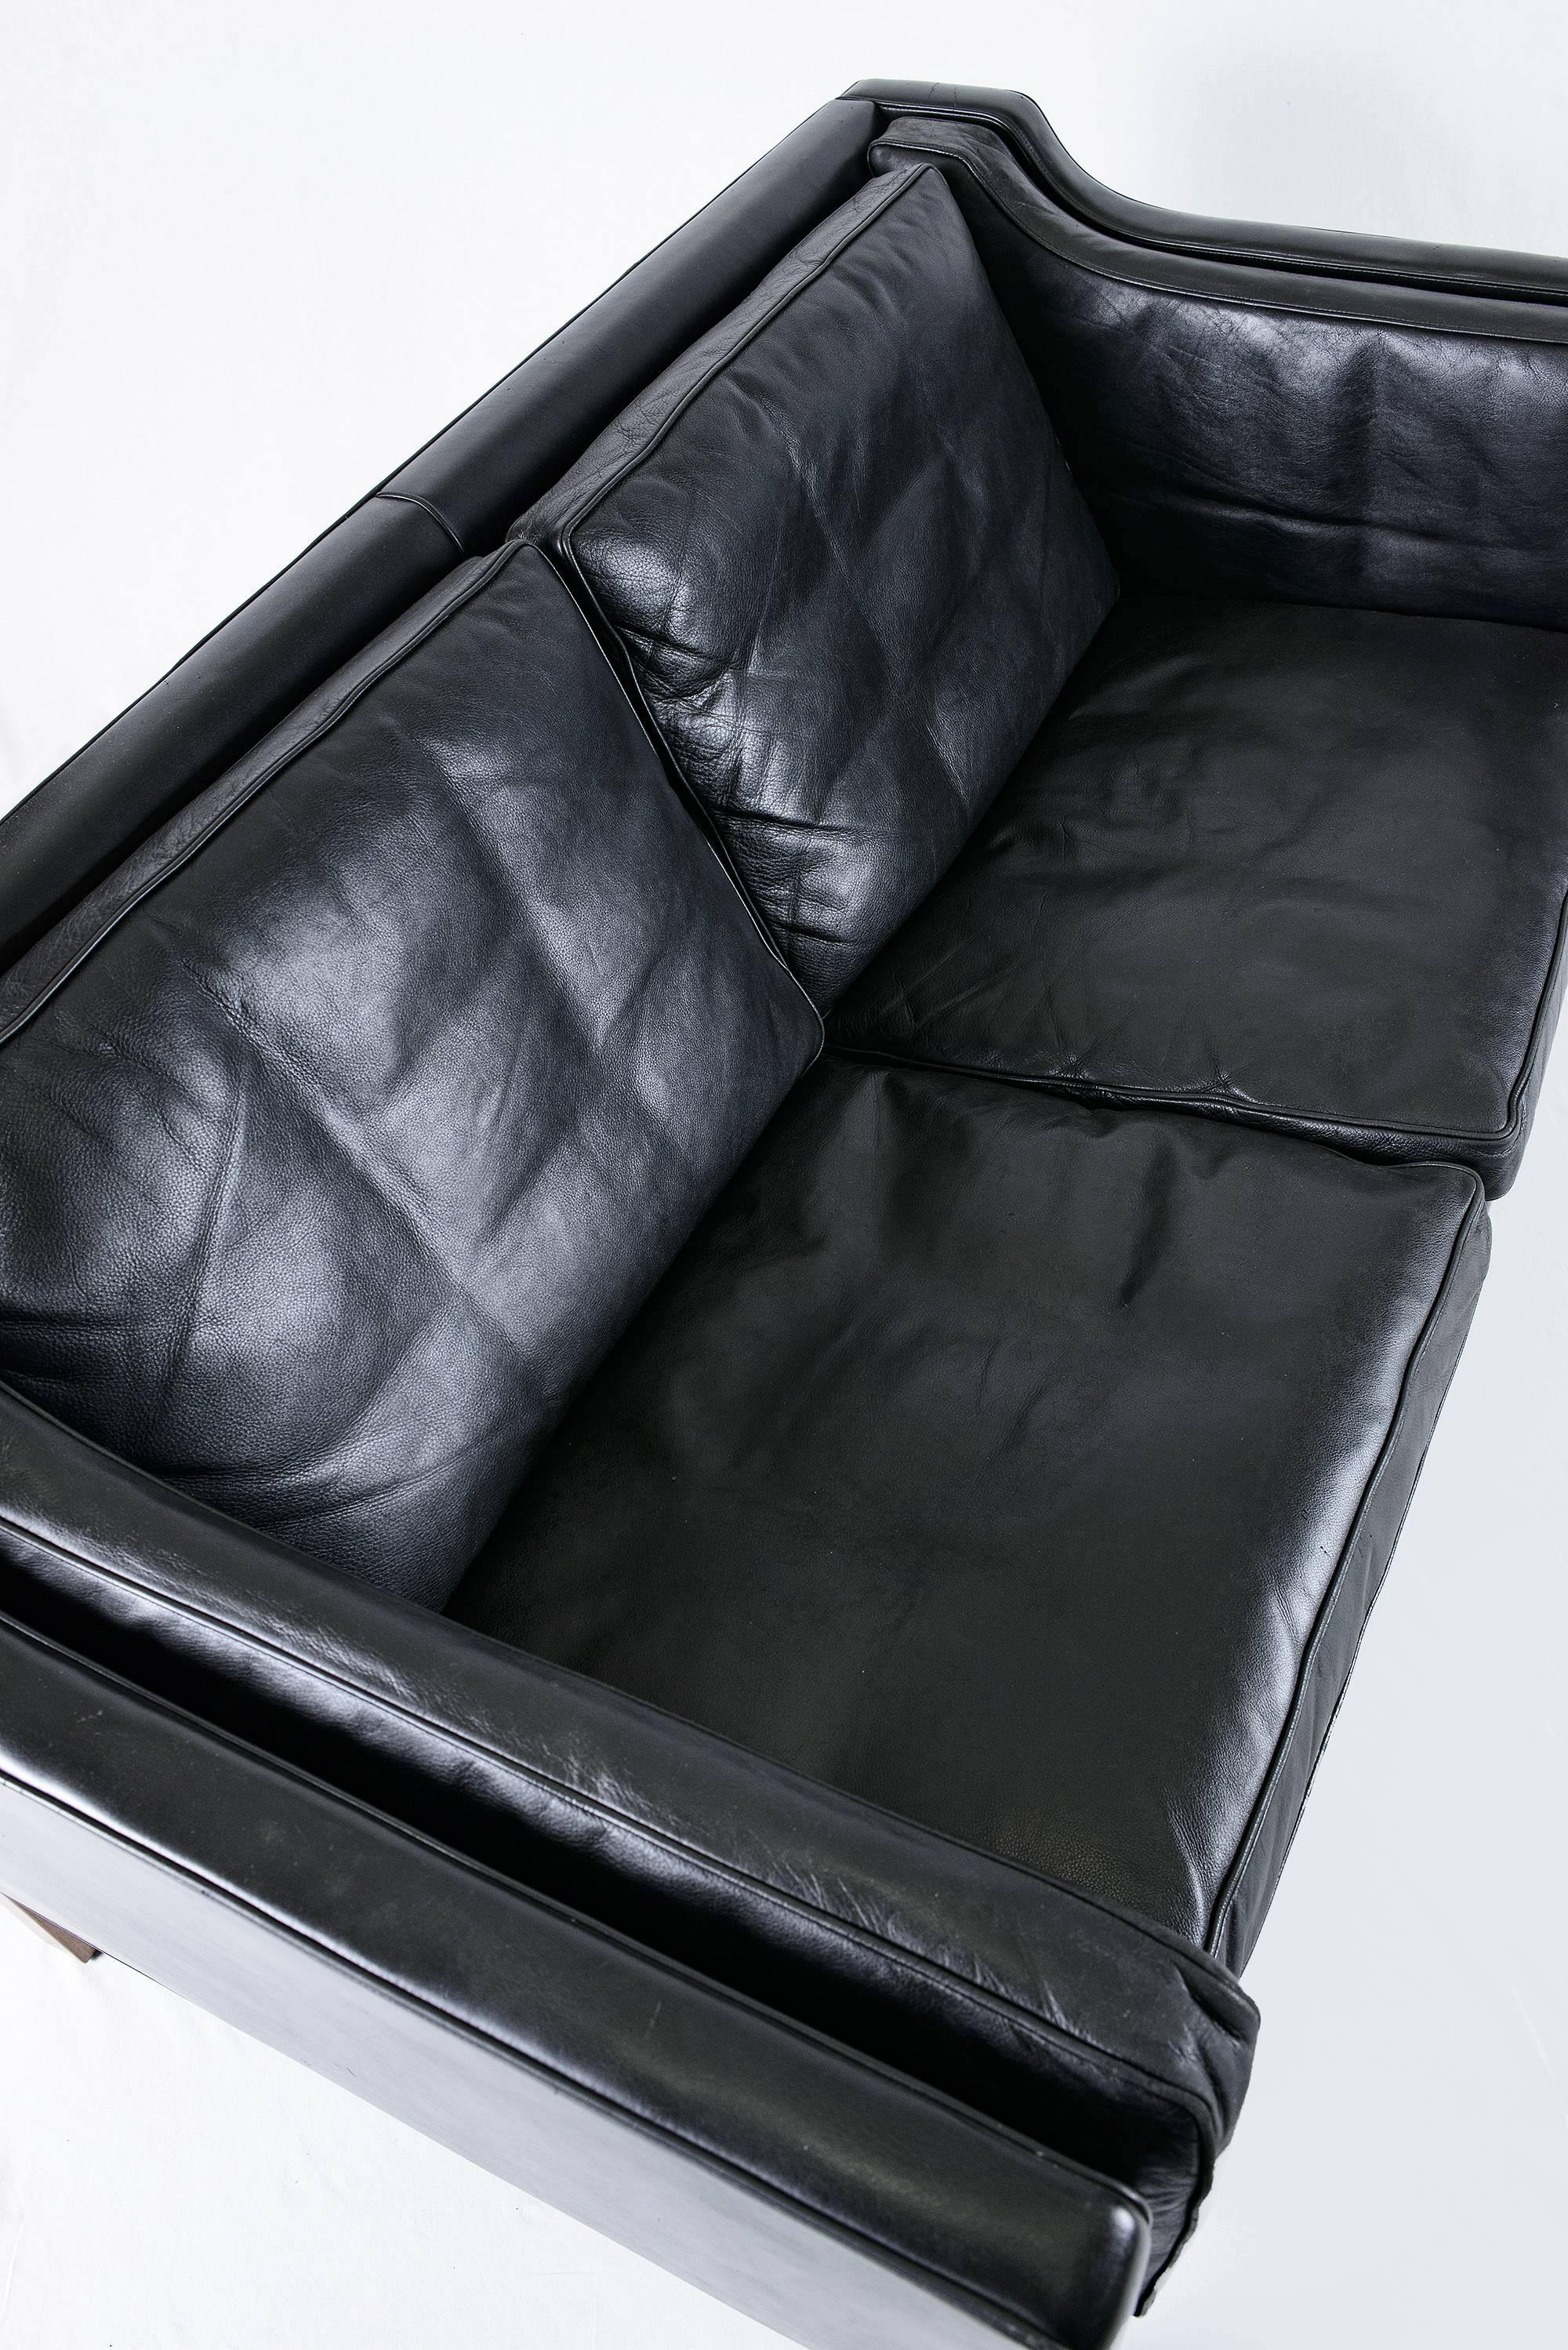 Borge Mogensen Model #2212 Two-Seat Sofa 1